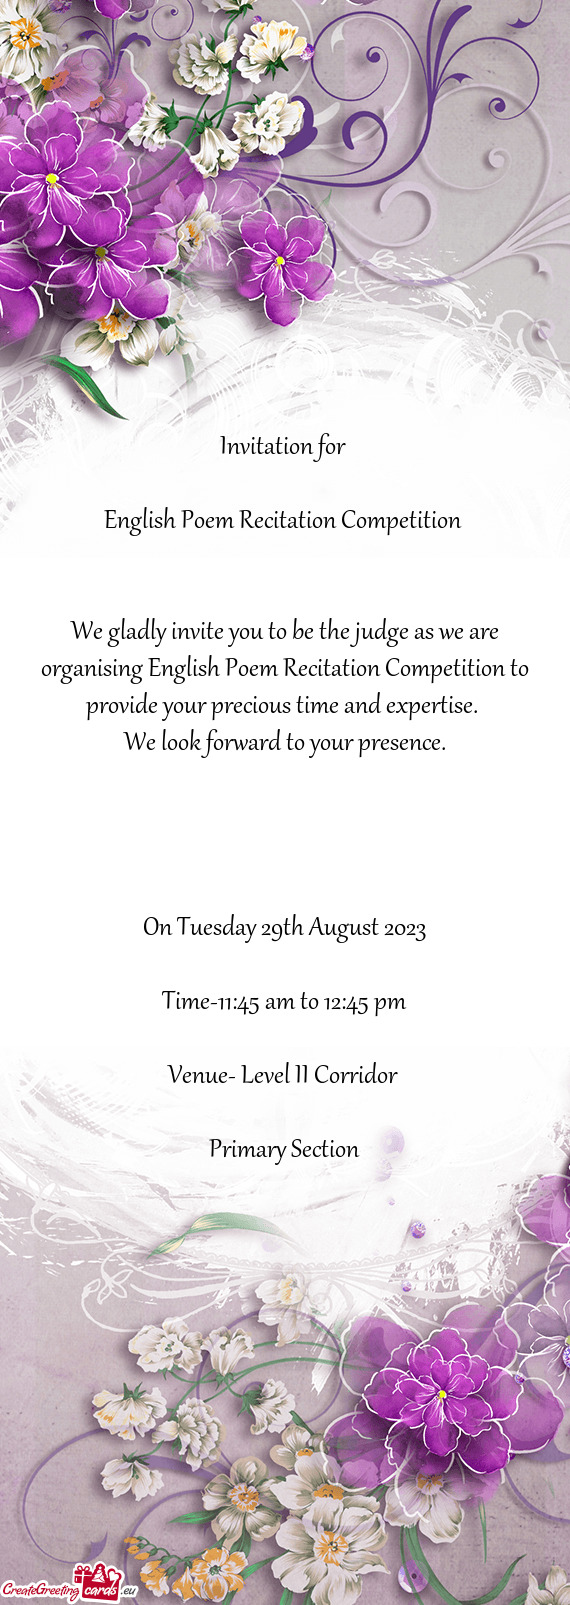 English Poem Recitation Competition